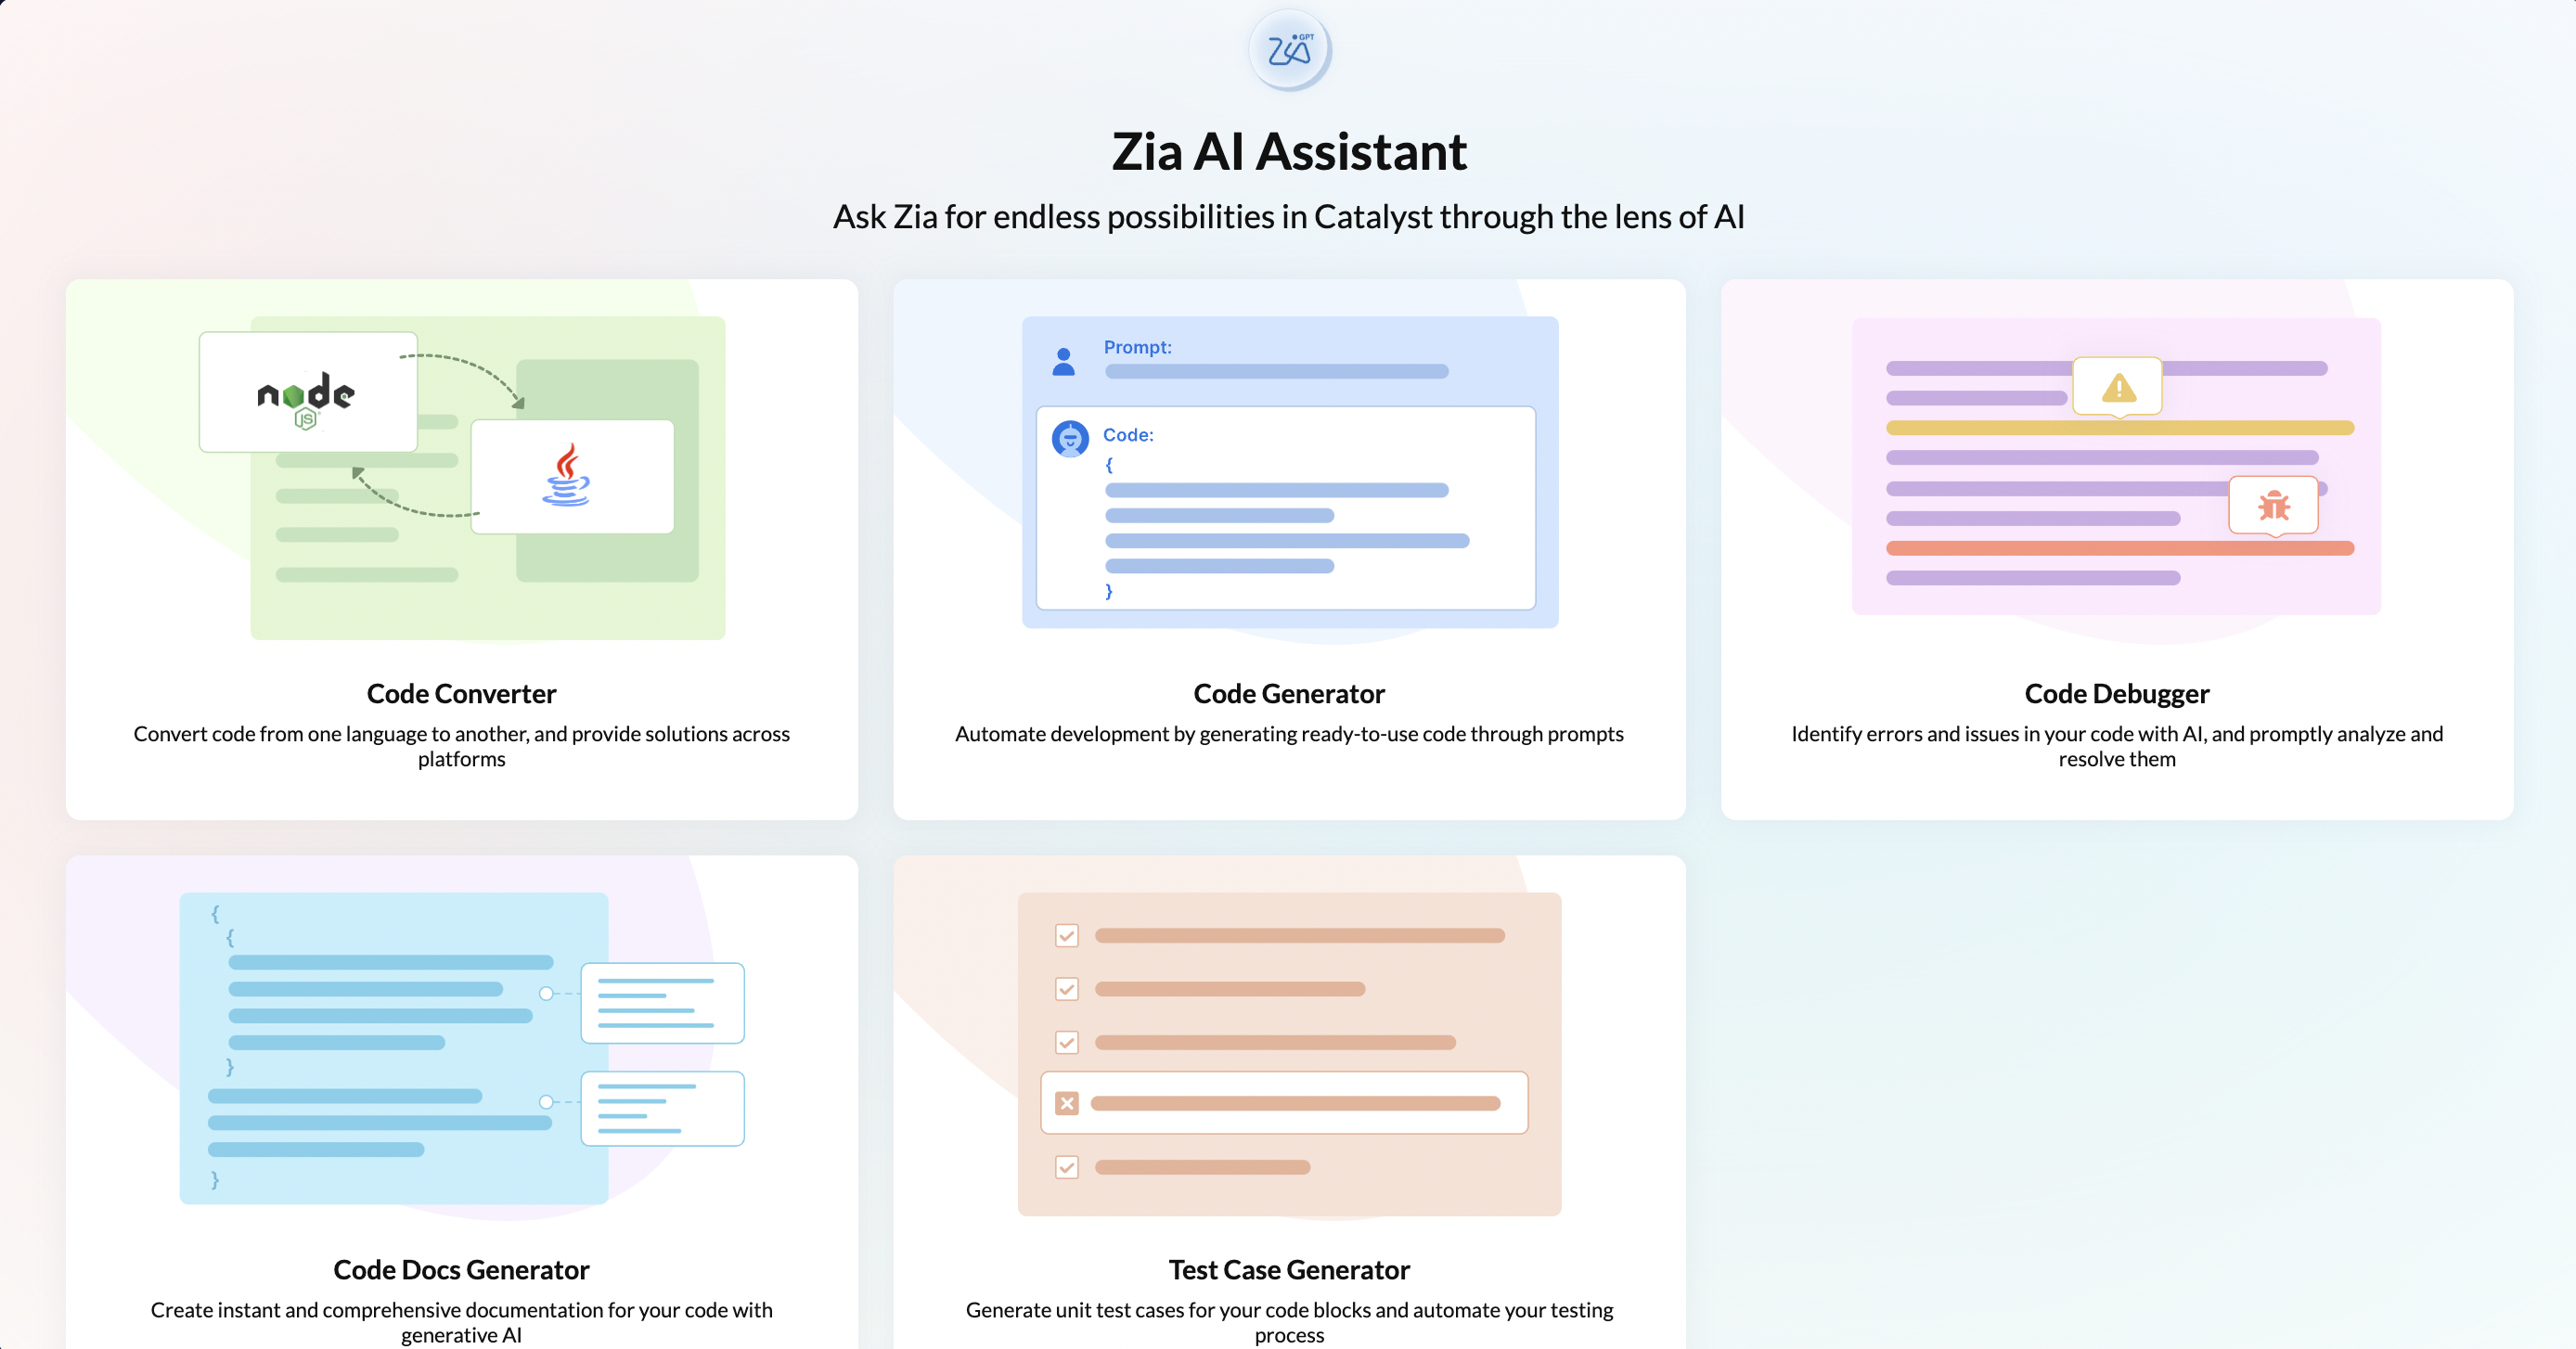 Access Zia AI Assistant